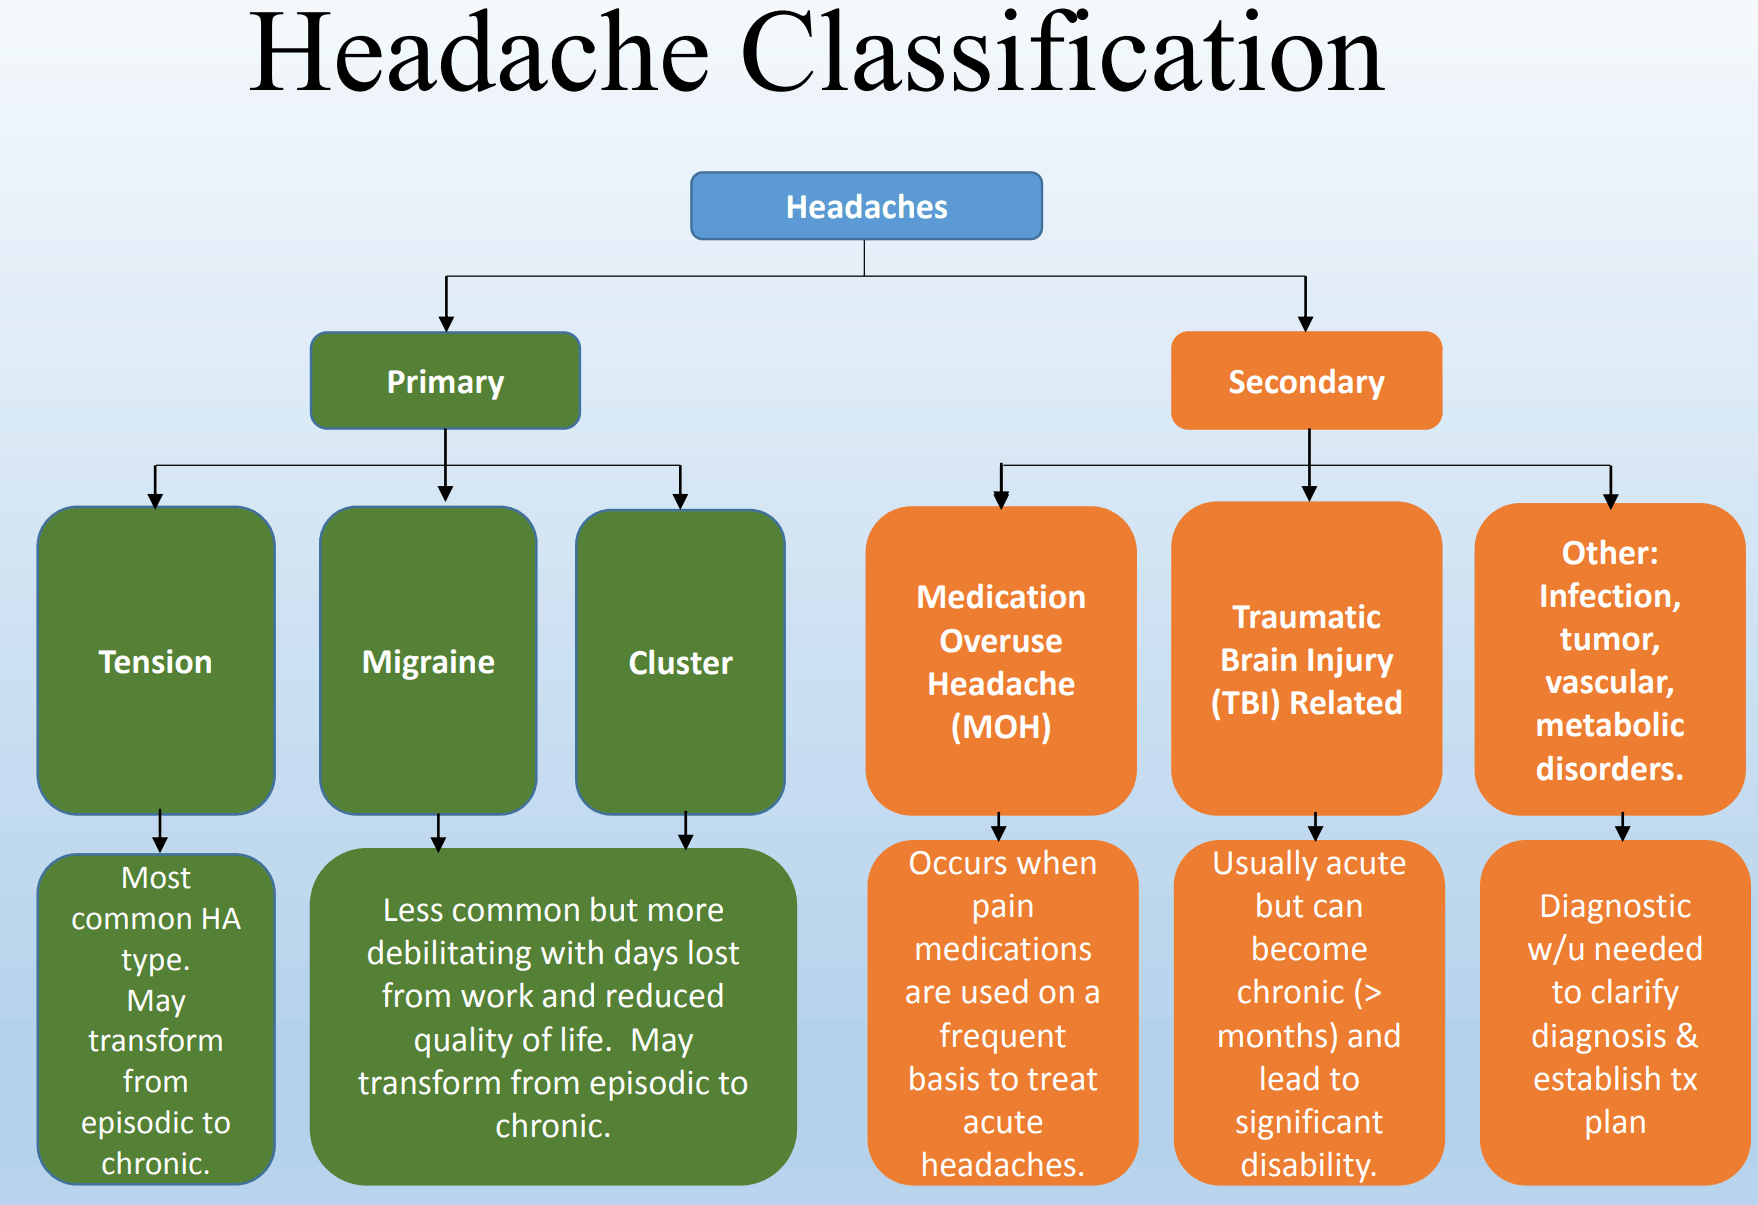 Headaches Classification Guide